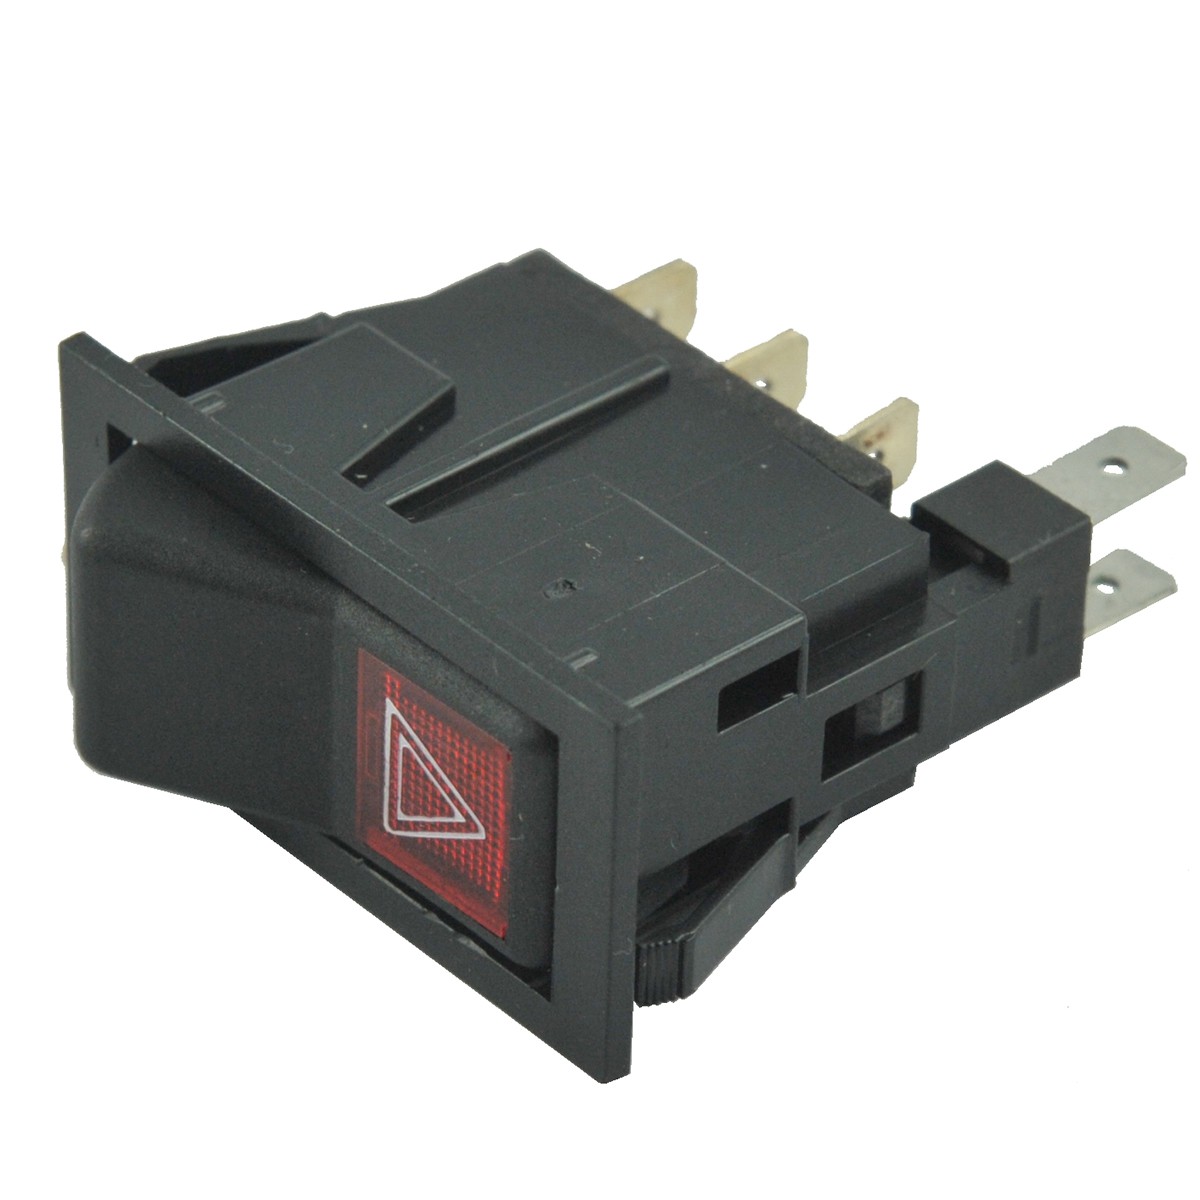 Hazard light switch / LS XJ 25 / TRG750 / A1750334 / 40032530